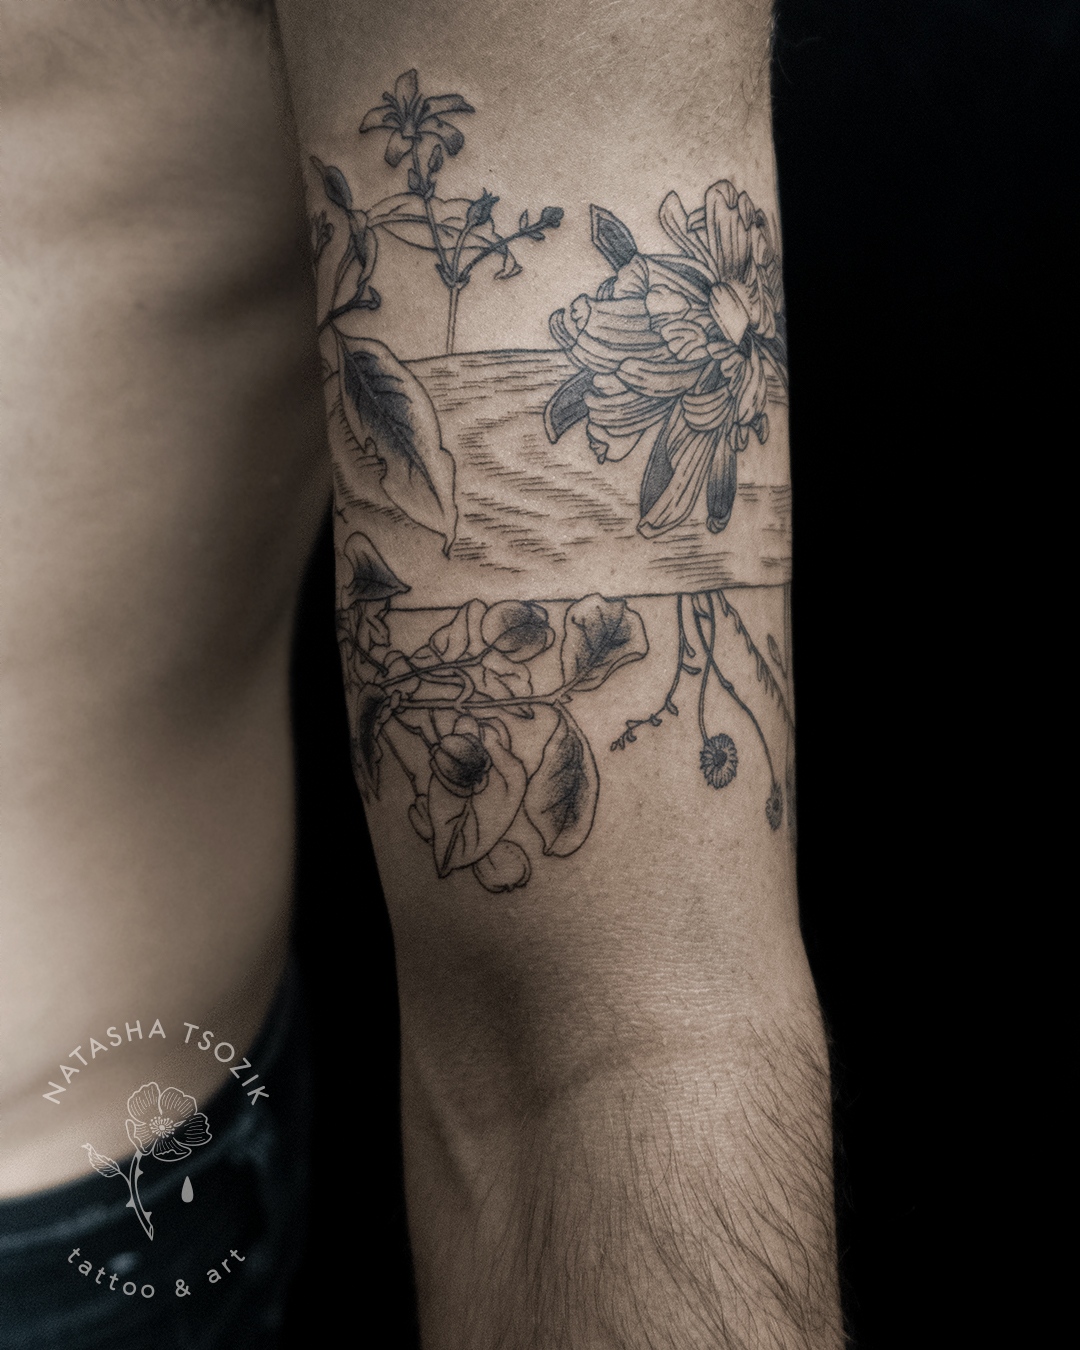 Armband Tattoo ideas | Armband tattoo design, Arm band tattoo, Band tattoo  designs